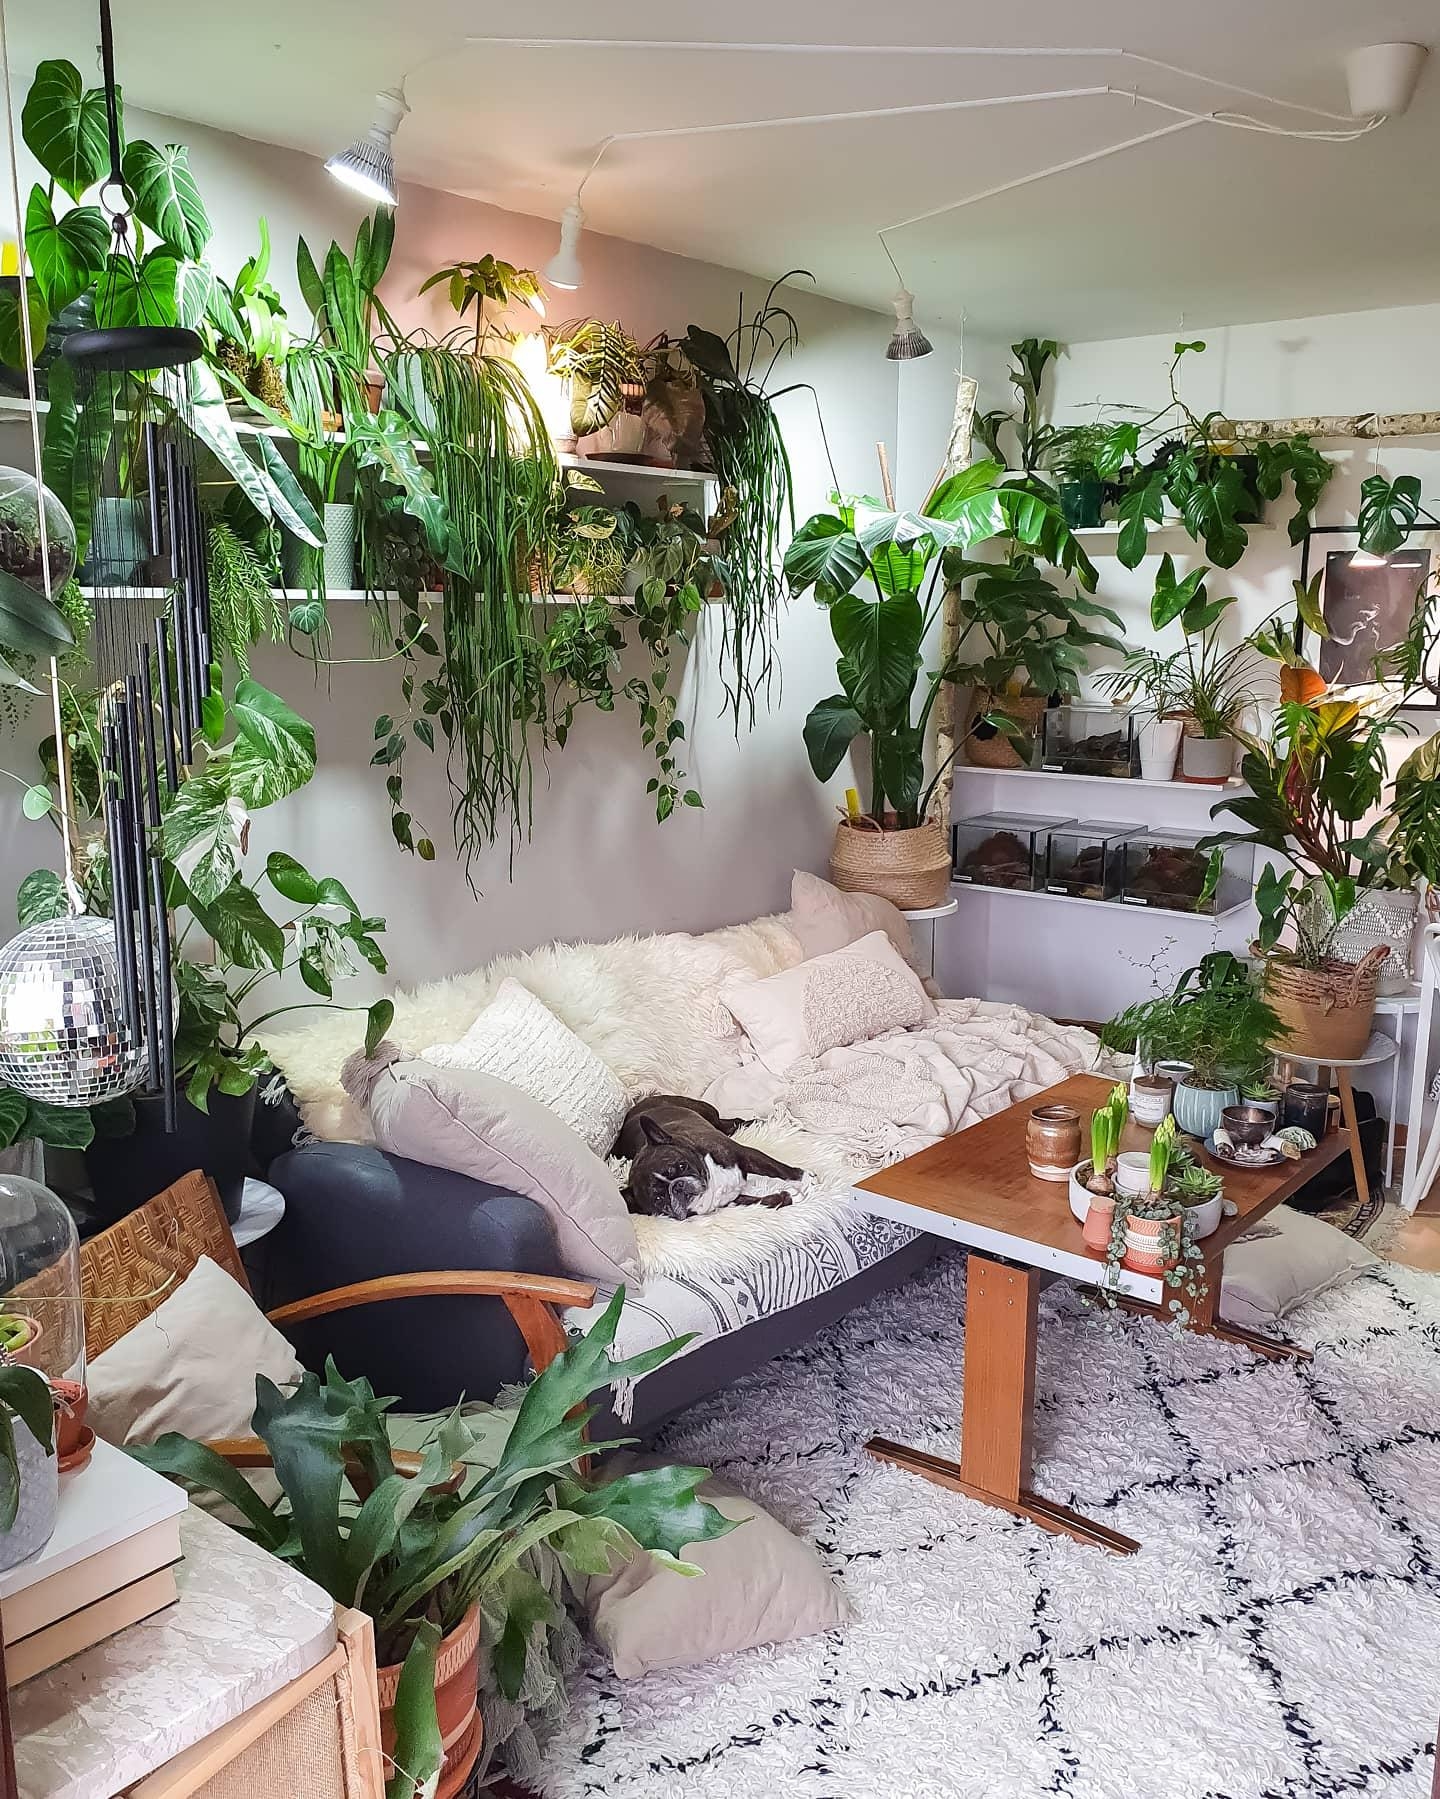 Let's get cozy #wohnzimmer #Pflanzen #couch #couchstyle #hygge